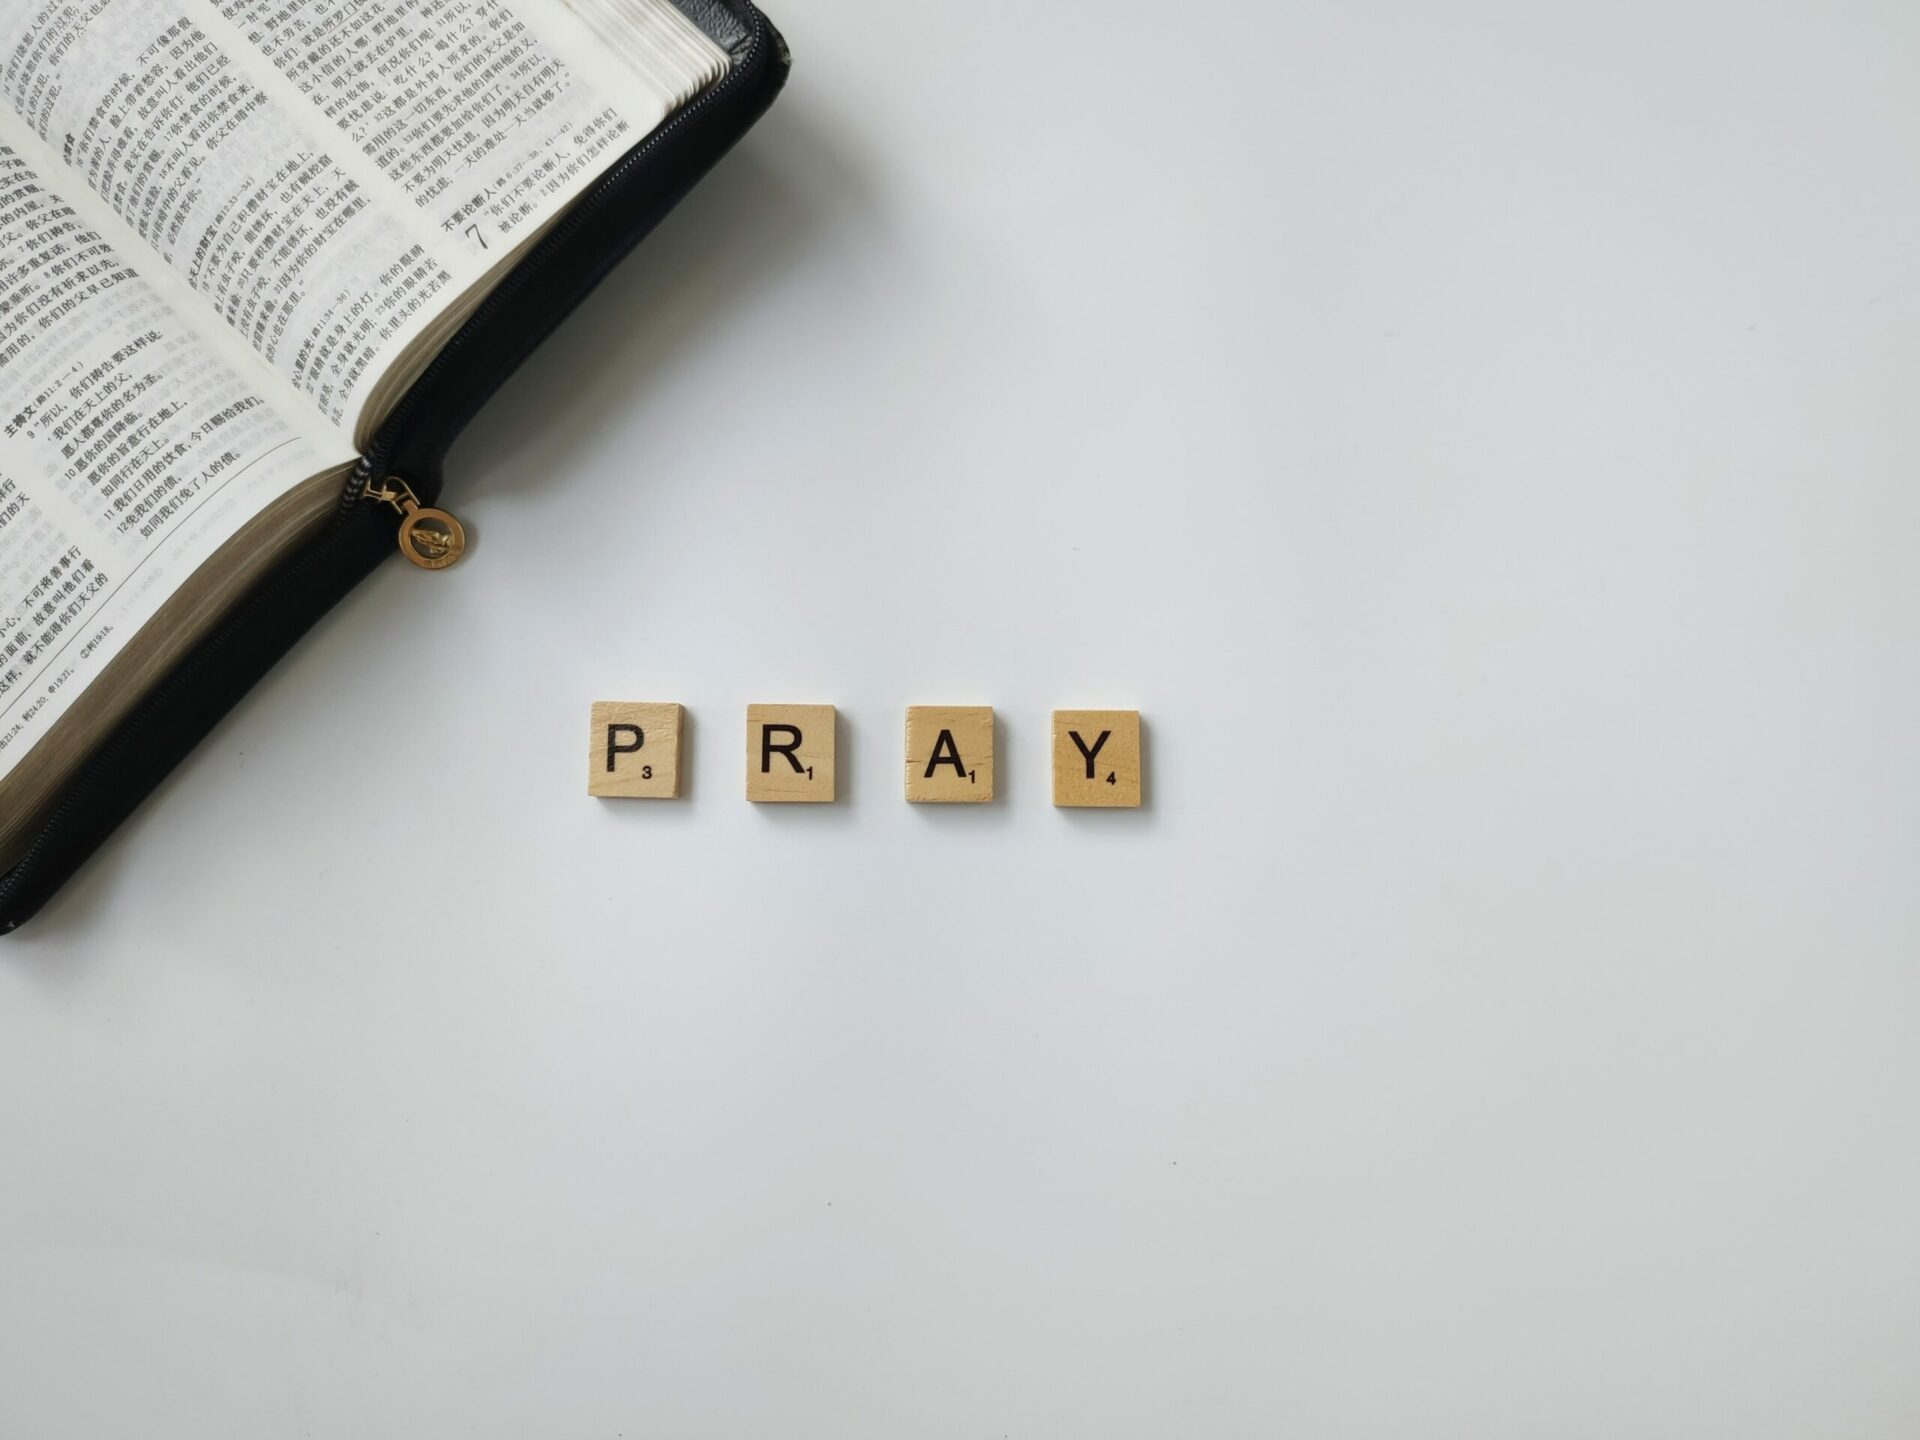 Pray tiles next to bible